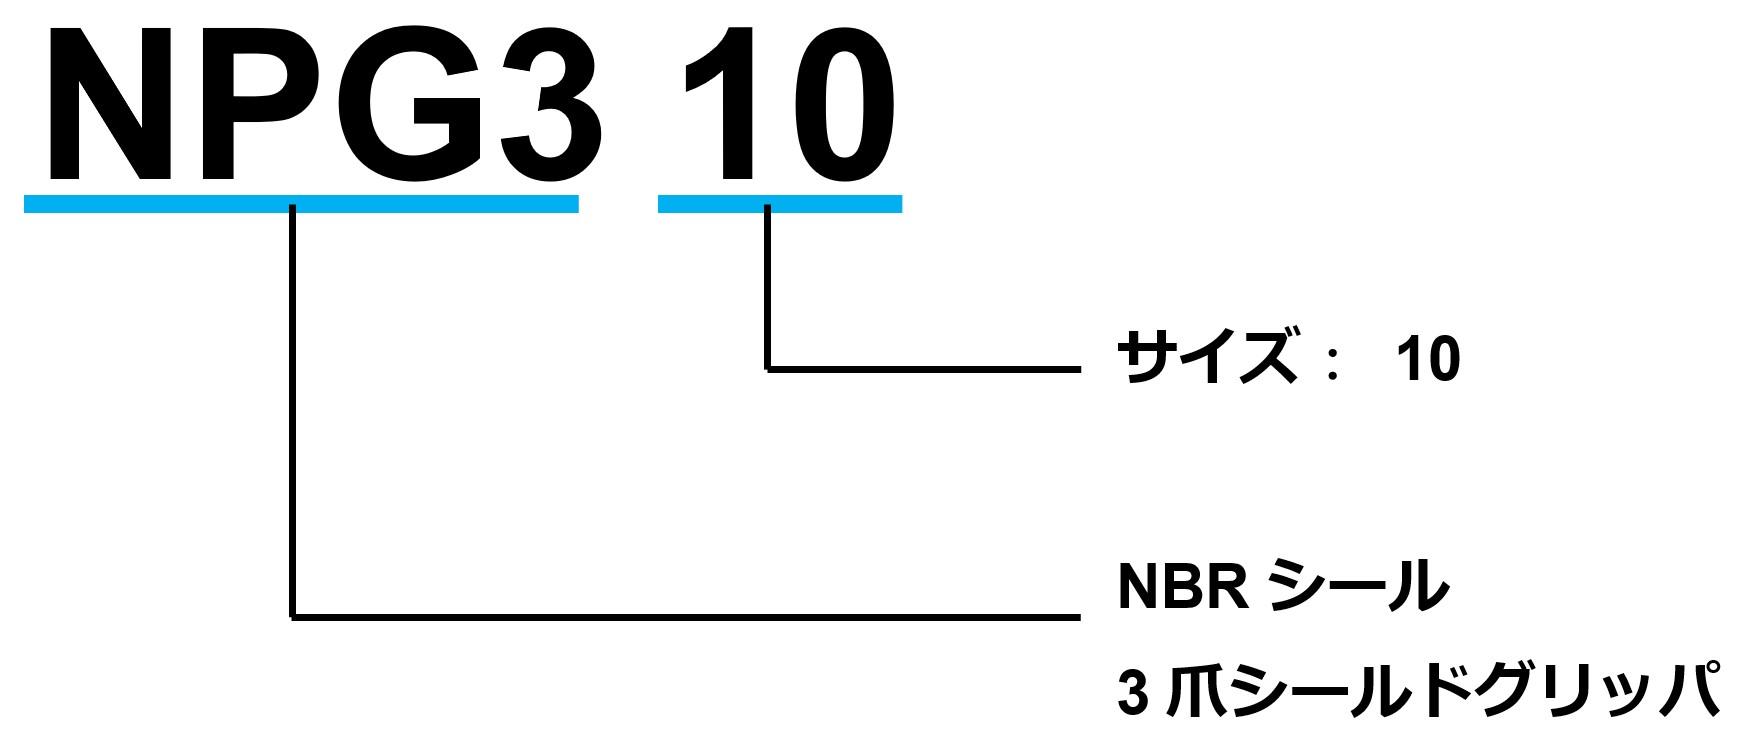 NPG3 시리즈